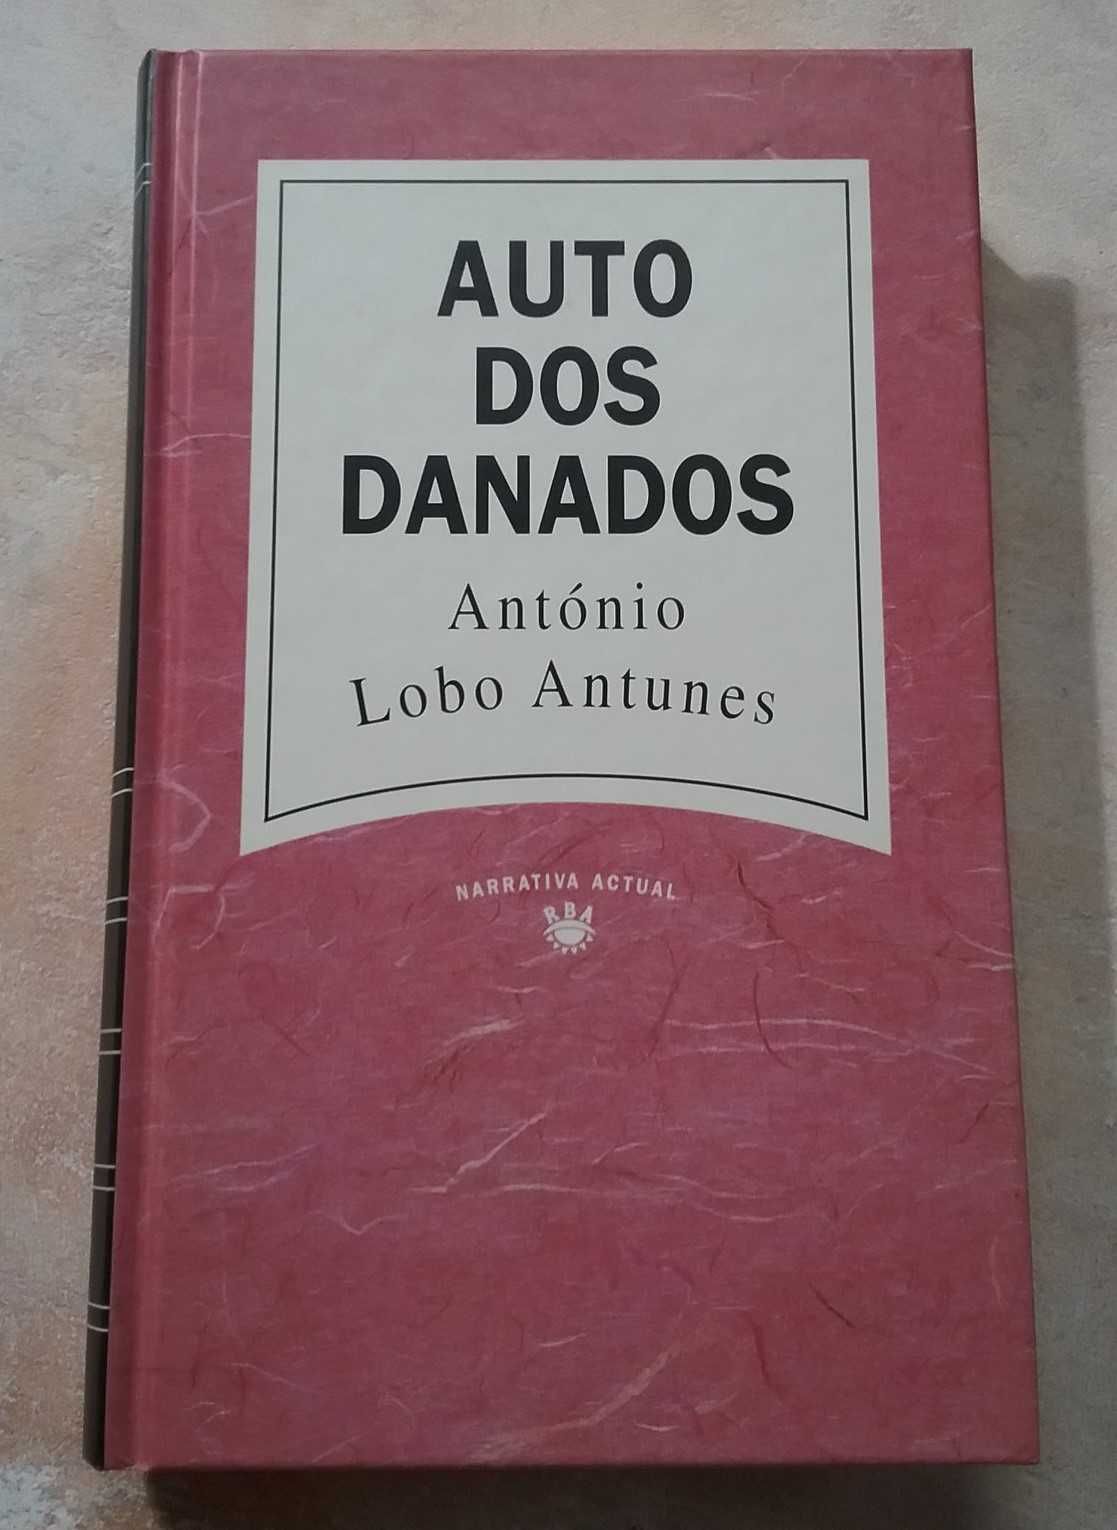 Livros de António Lobo Antunes